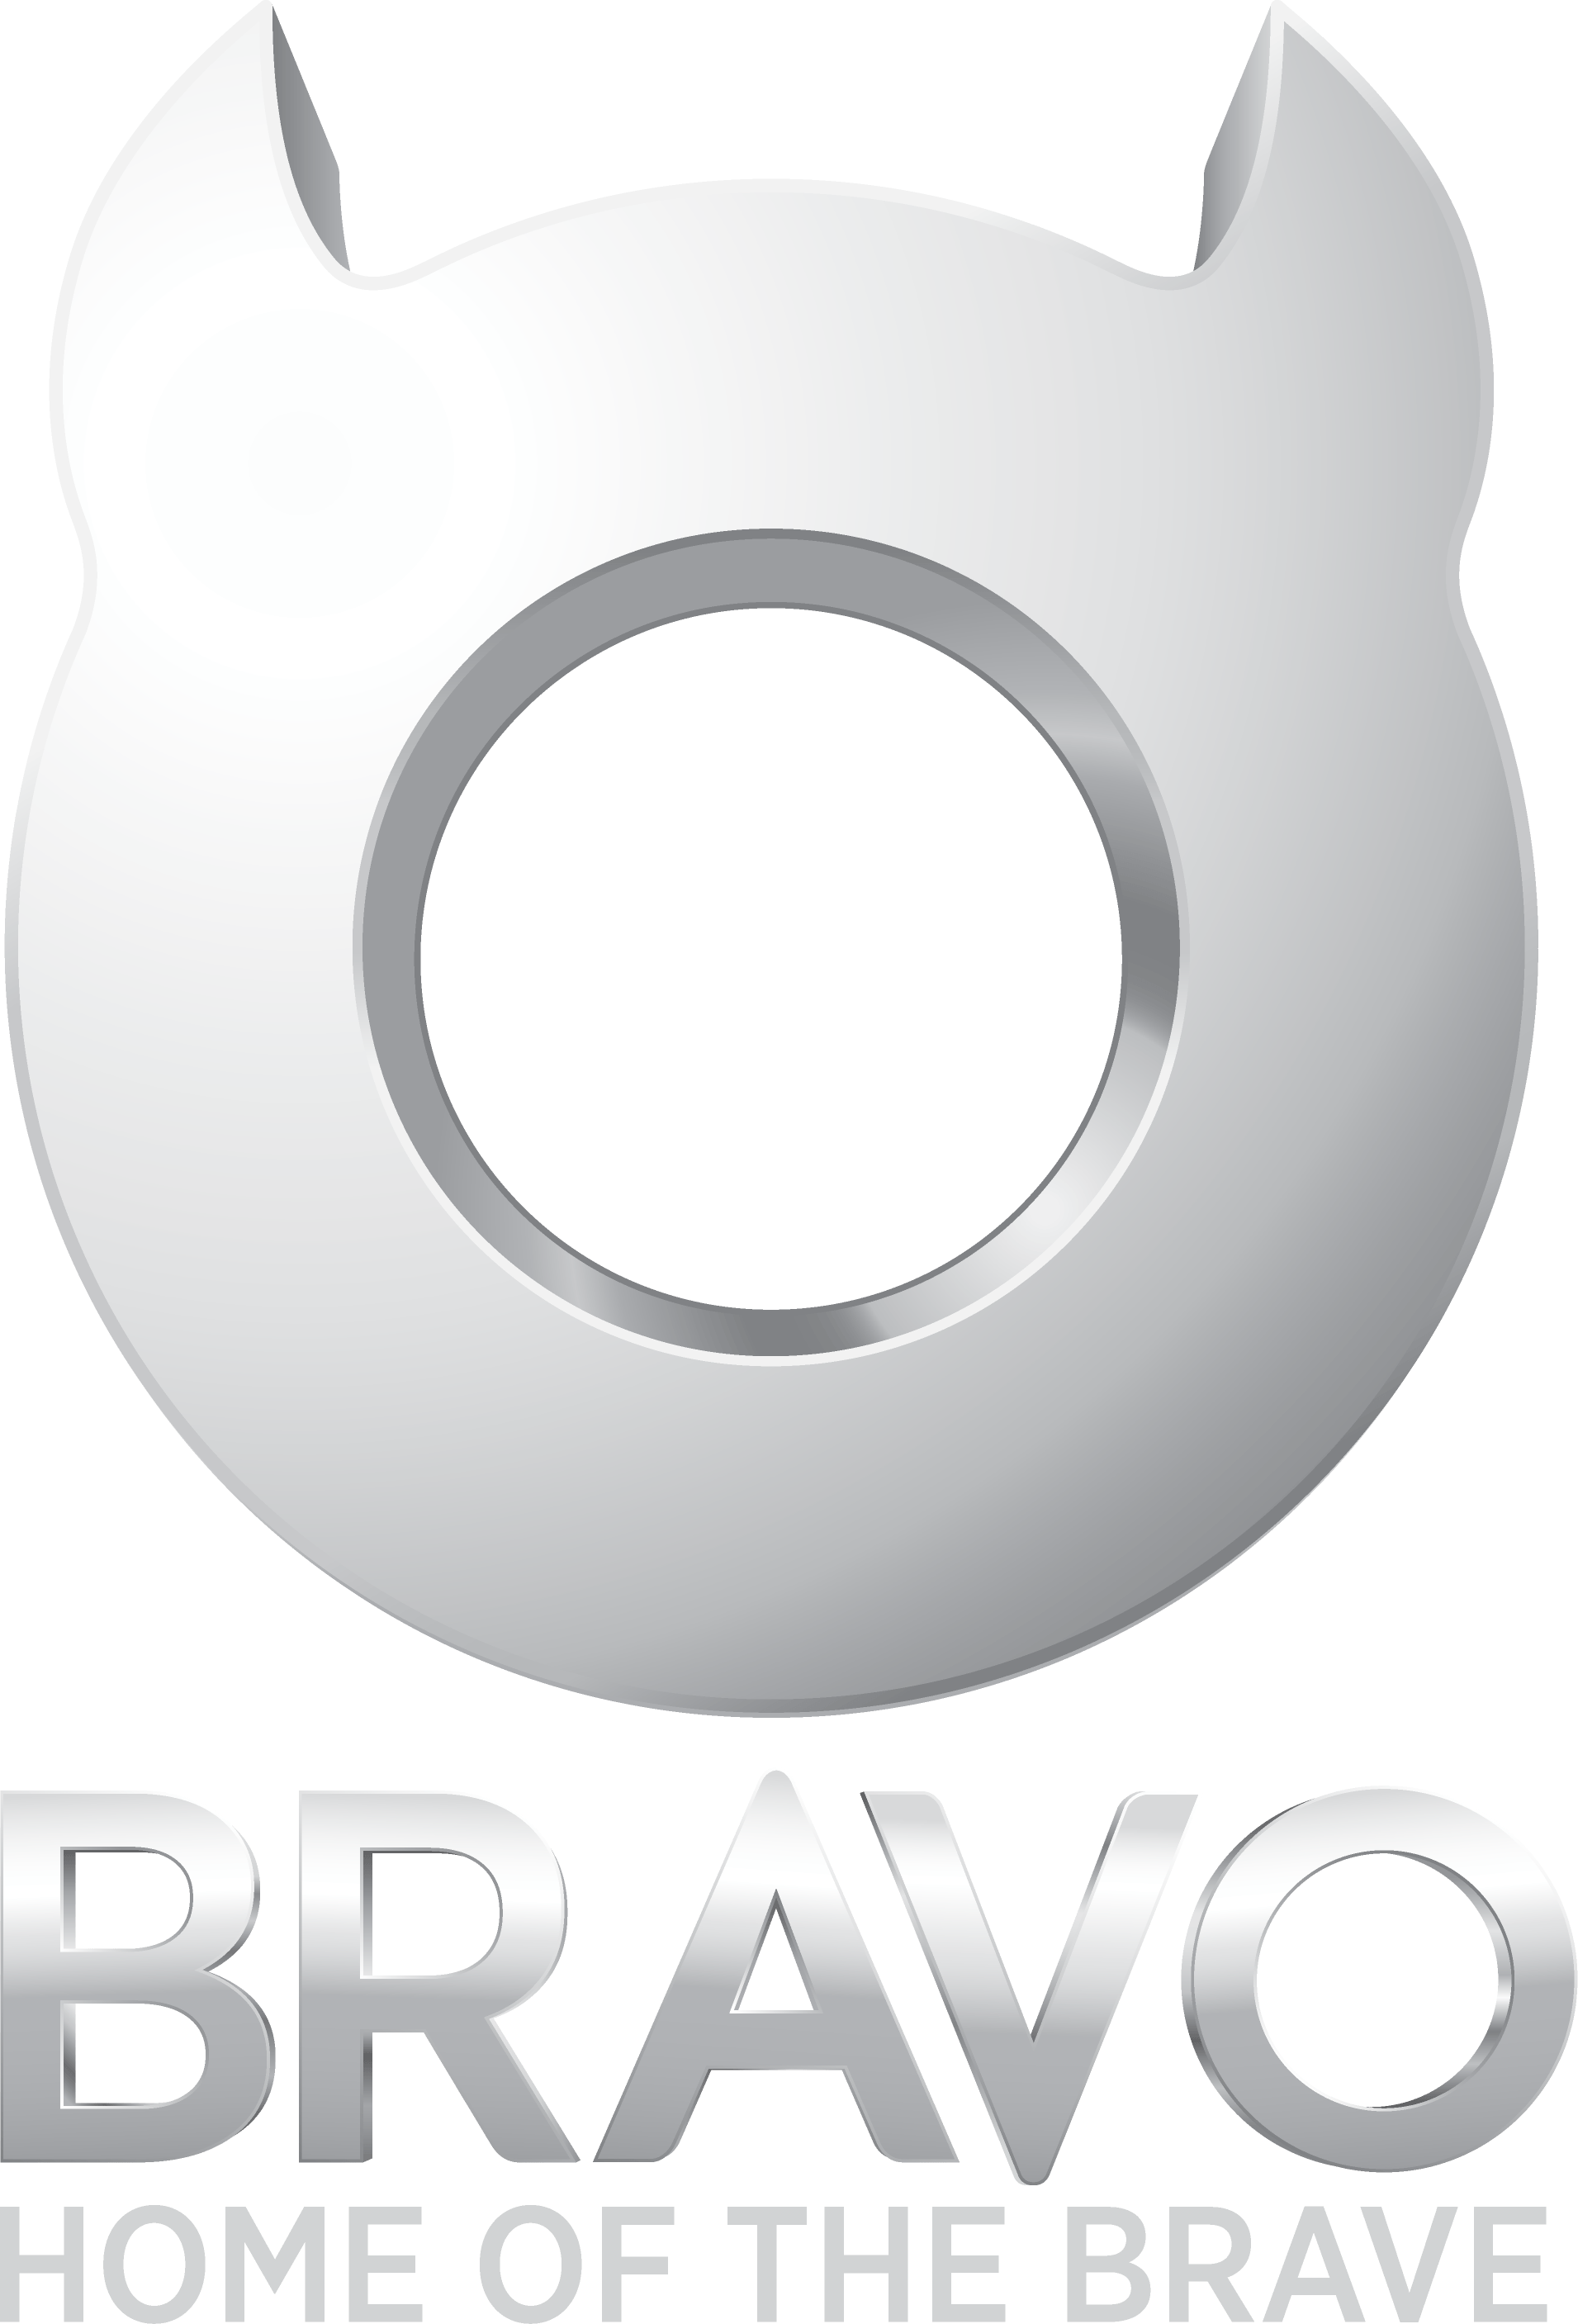 Bravo Logo - Image - Bravo logo 2010.png | Logopedia | FANDOM powered by Wikia